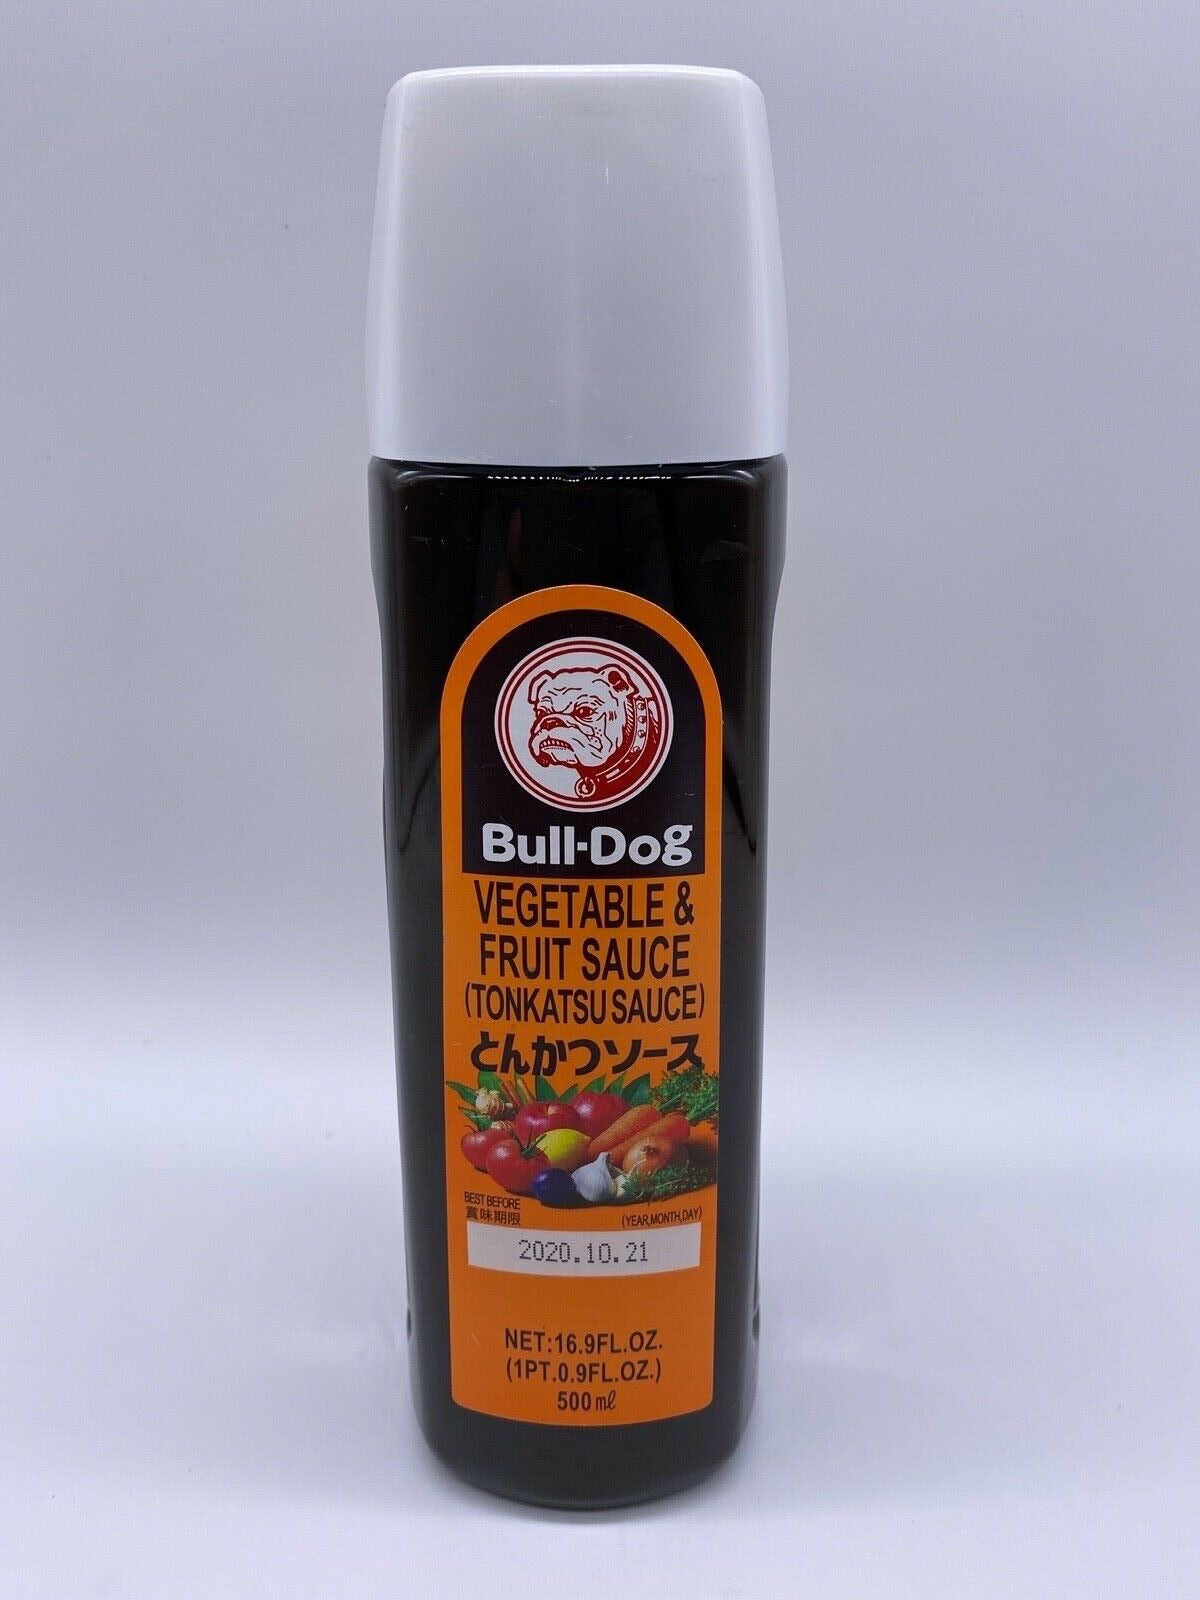 Salsa de frutas y vegetales Bull-Dog (salsa tonkatsu) - 500ml/16.9FLoz